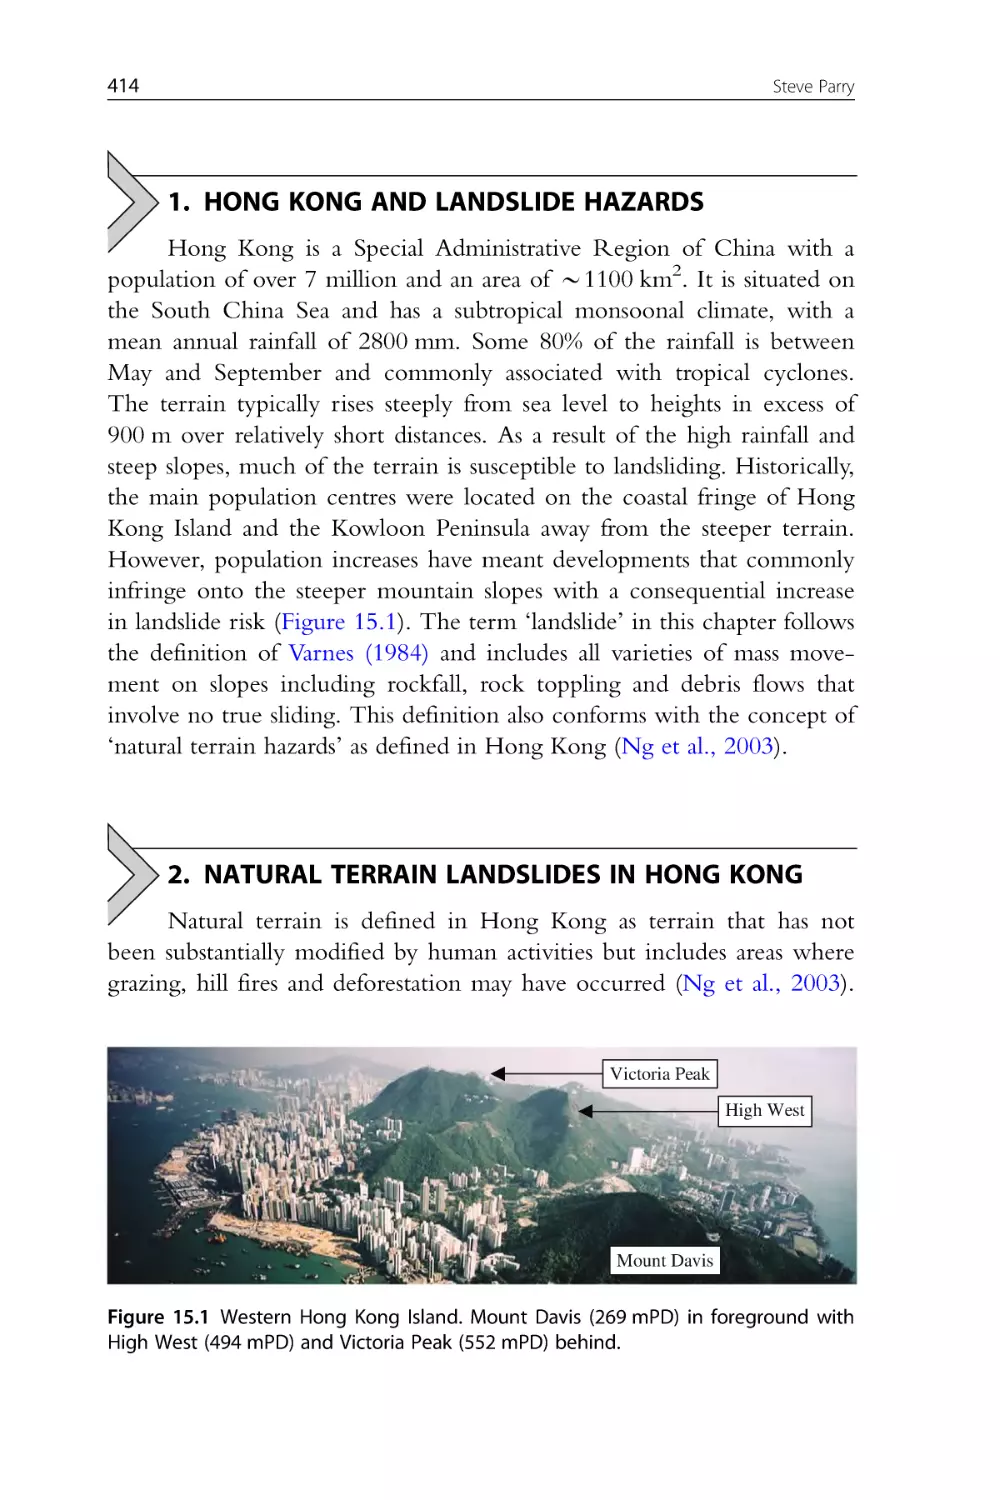 1. Hong Kong and Landslide Hazards
2. Natural Terrain Landslides in Hong Kong